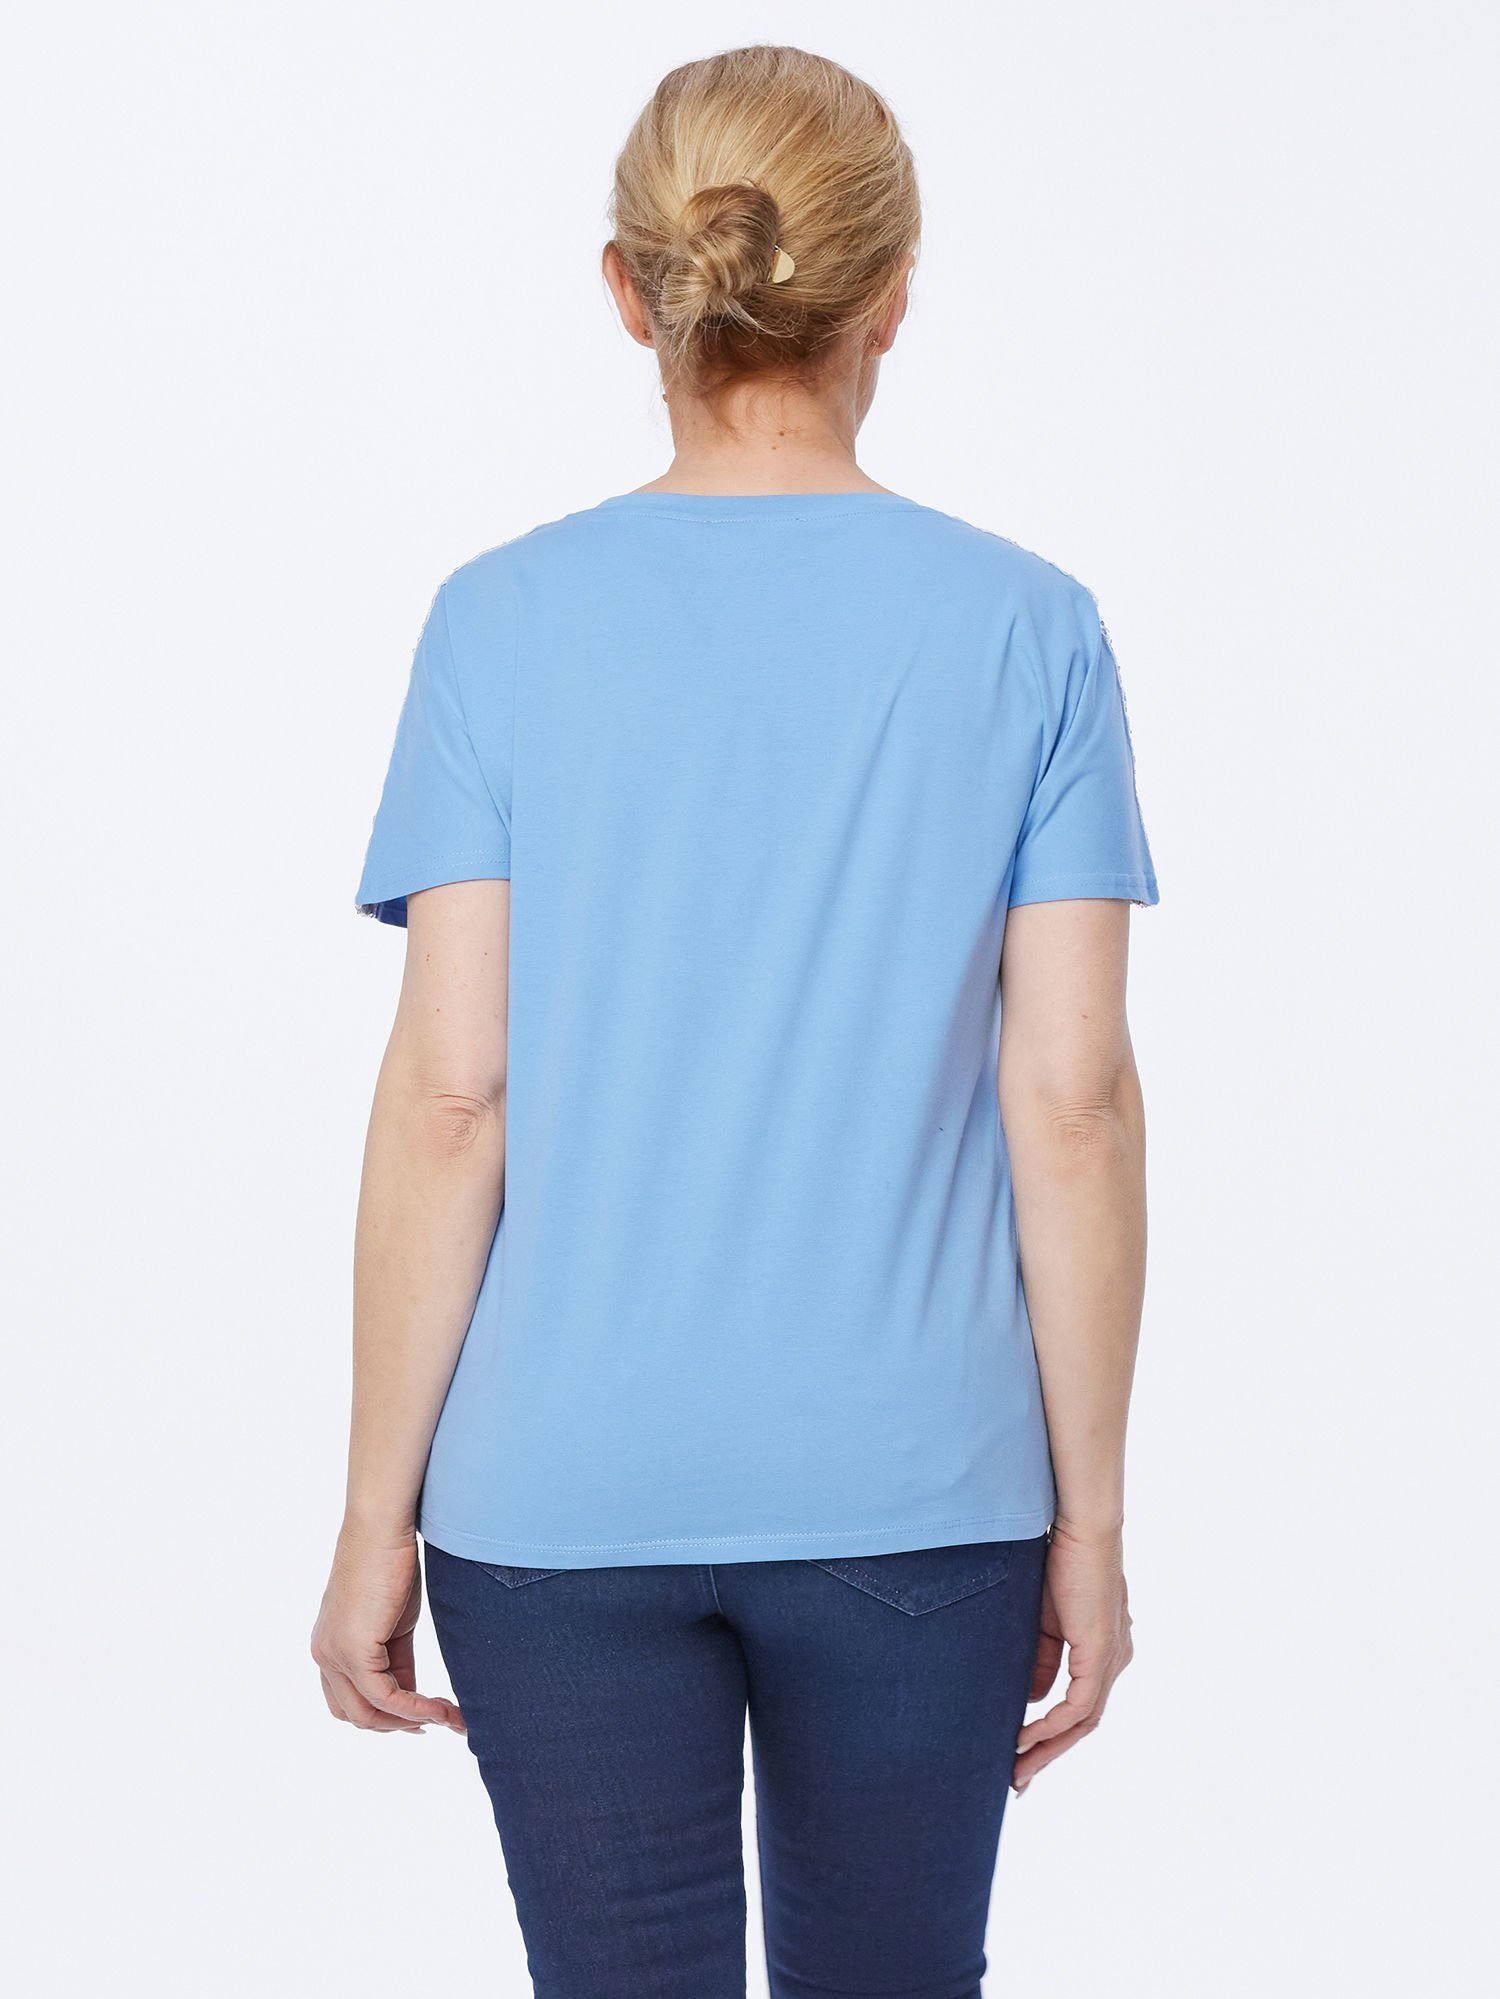 Christian Materne T-Shirt Kurzarmbluse Stern-Motiv blau mit